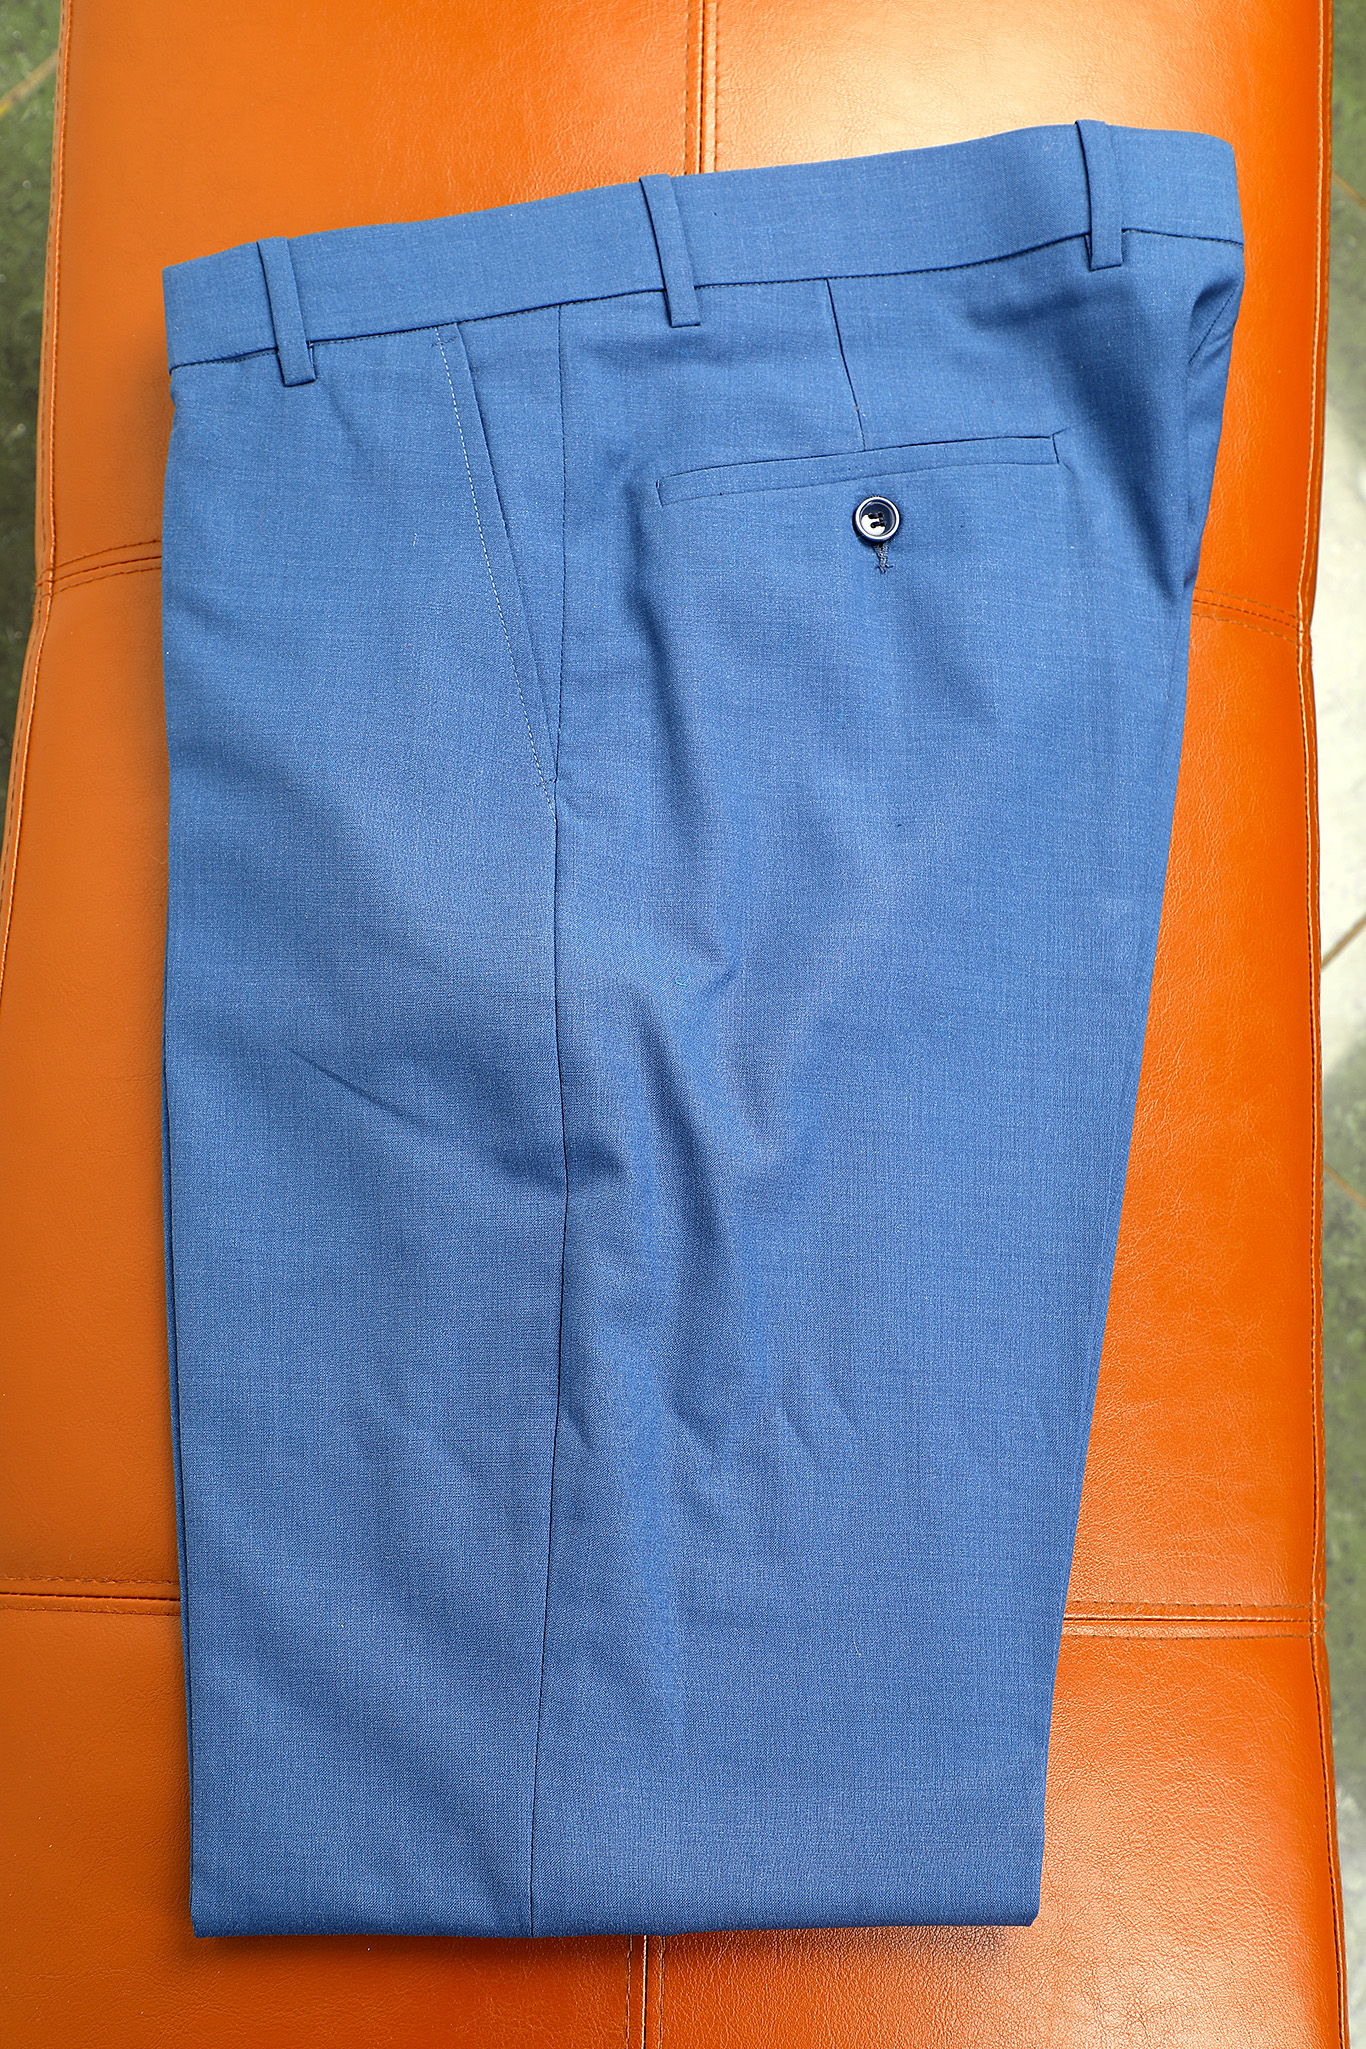 Parliament blue trousers in Nairobi Kenya